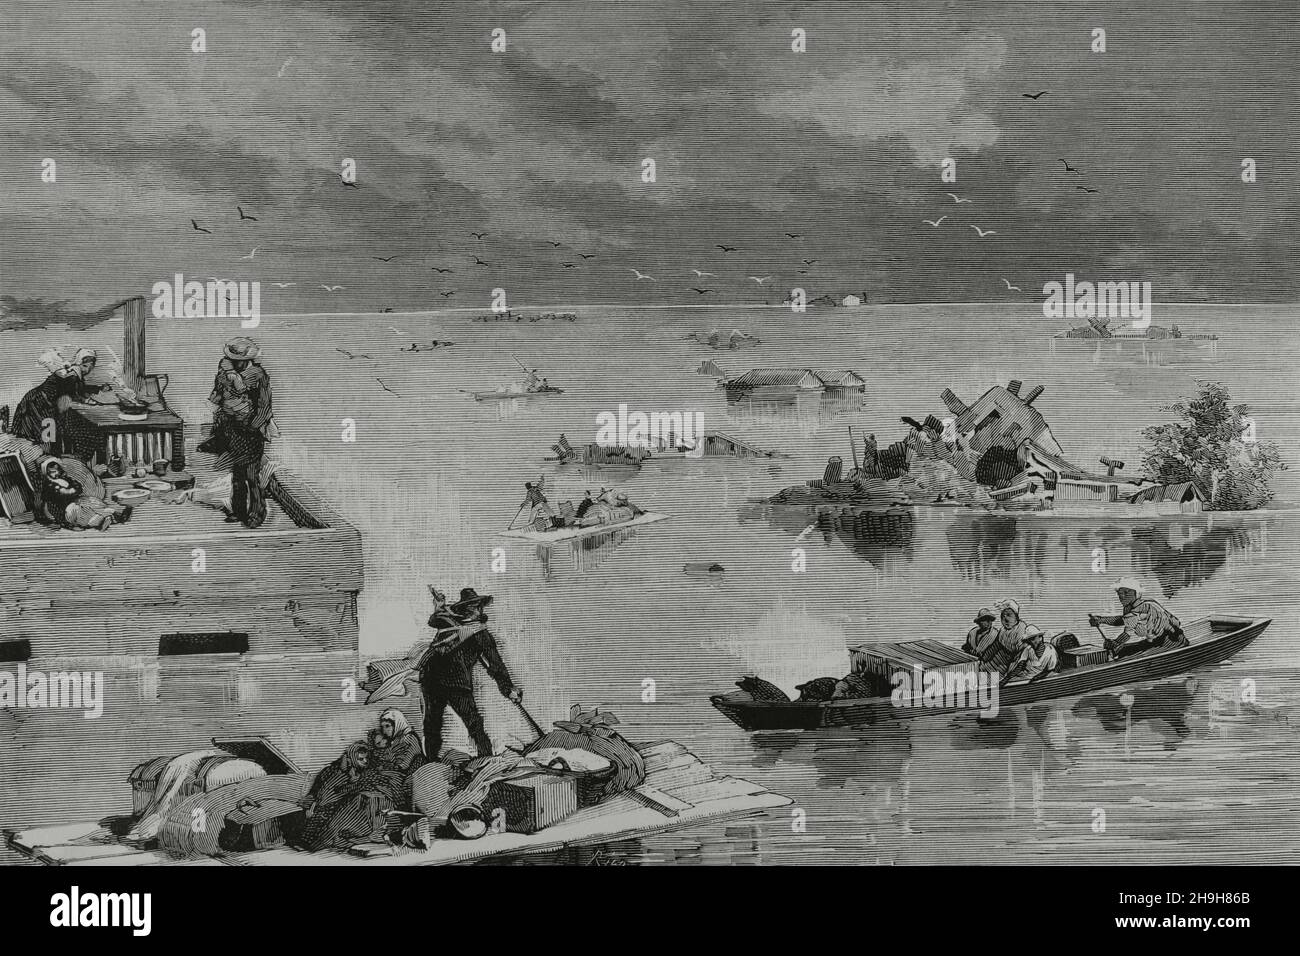 Vereinigte Staaten von Amerika. Mississippi River Überlauf. Memphis Plain Flutkatastrophe. Gravur. La Ilustración Española y Americana, 1882. Stockfoto